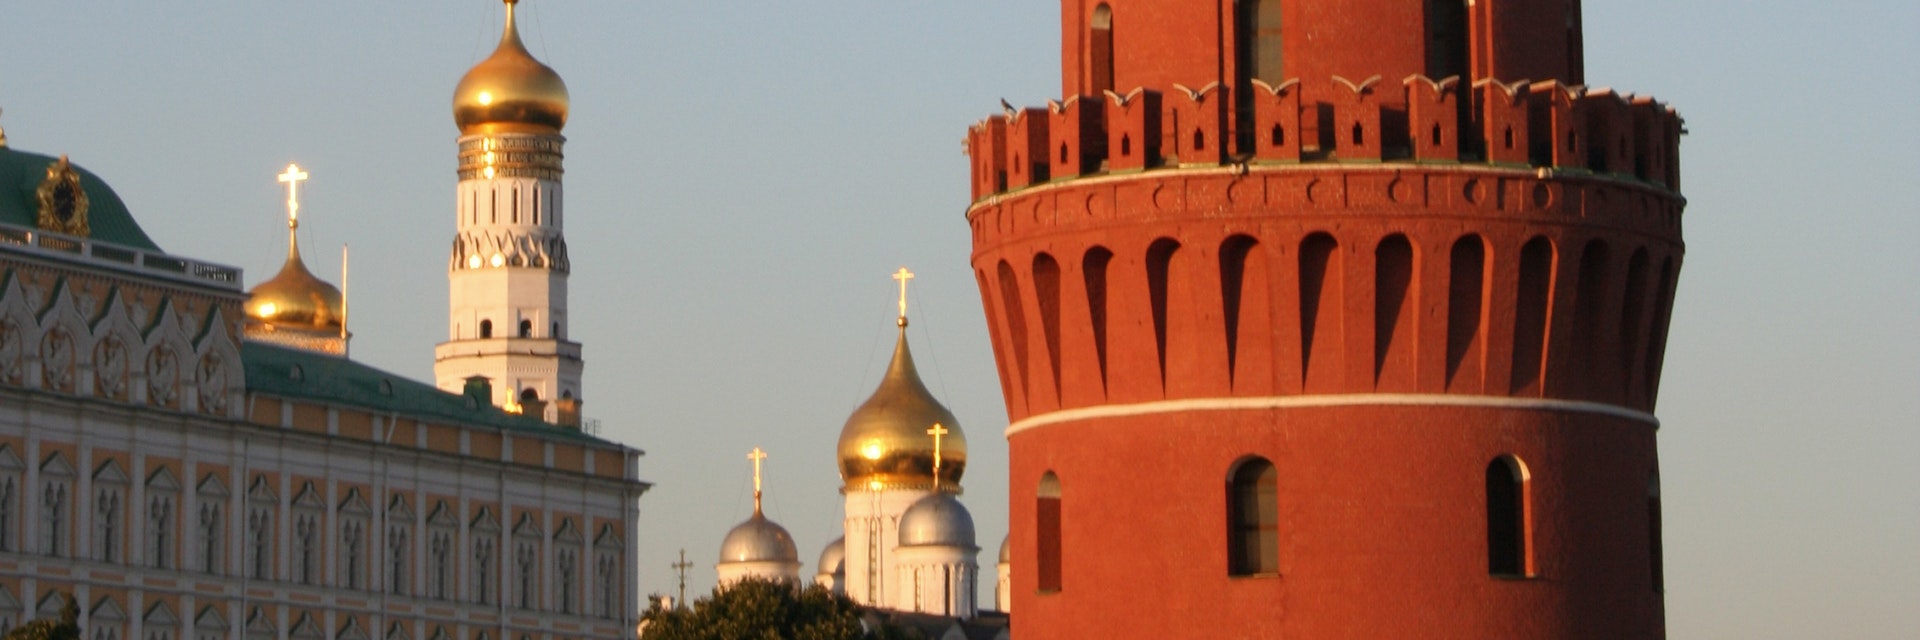 Exterior of Water Tower at Kremlin.